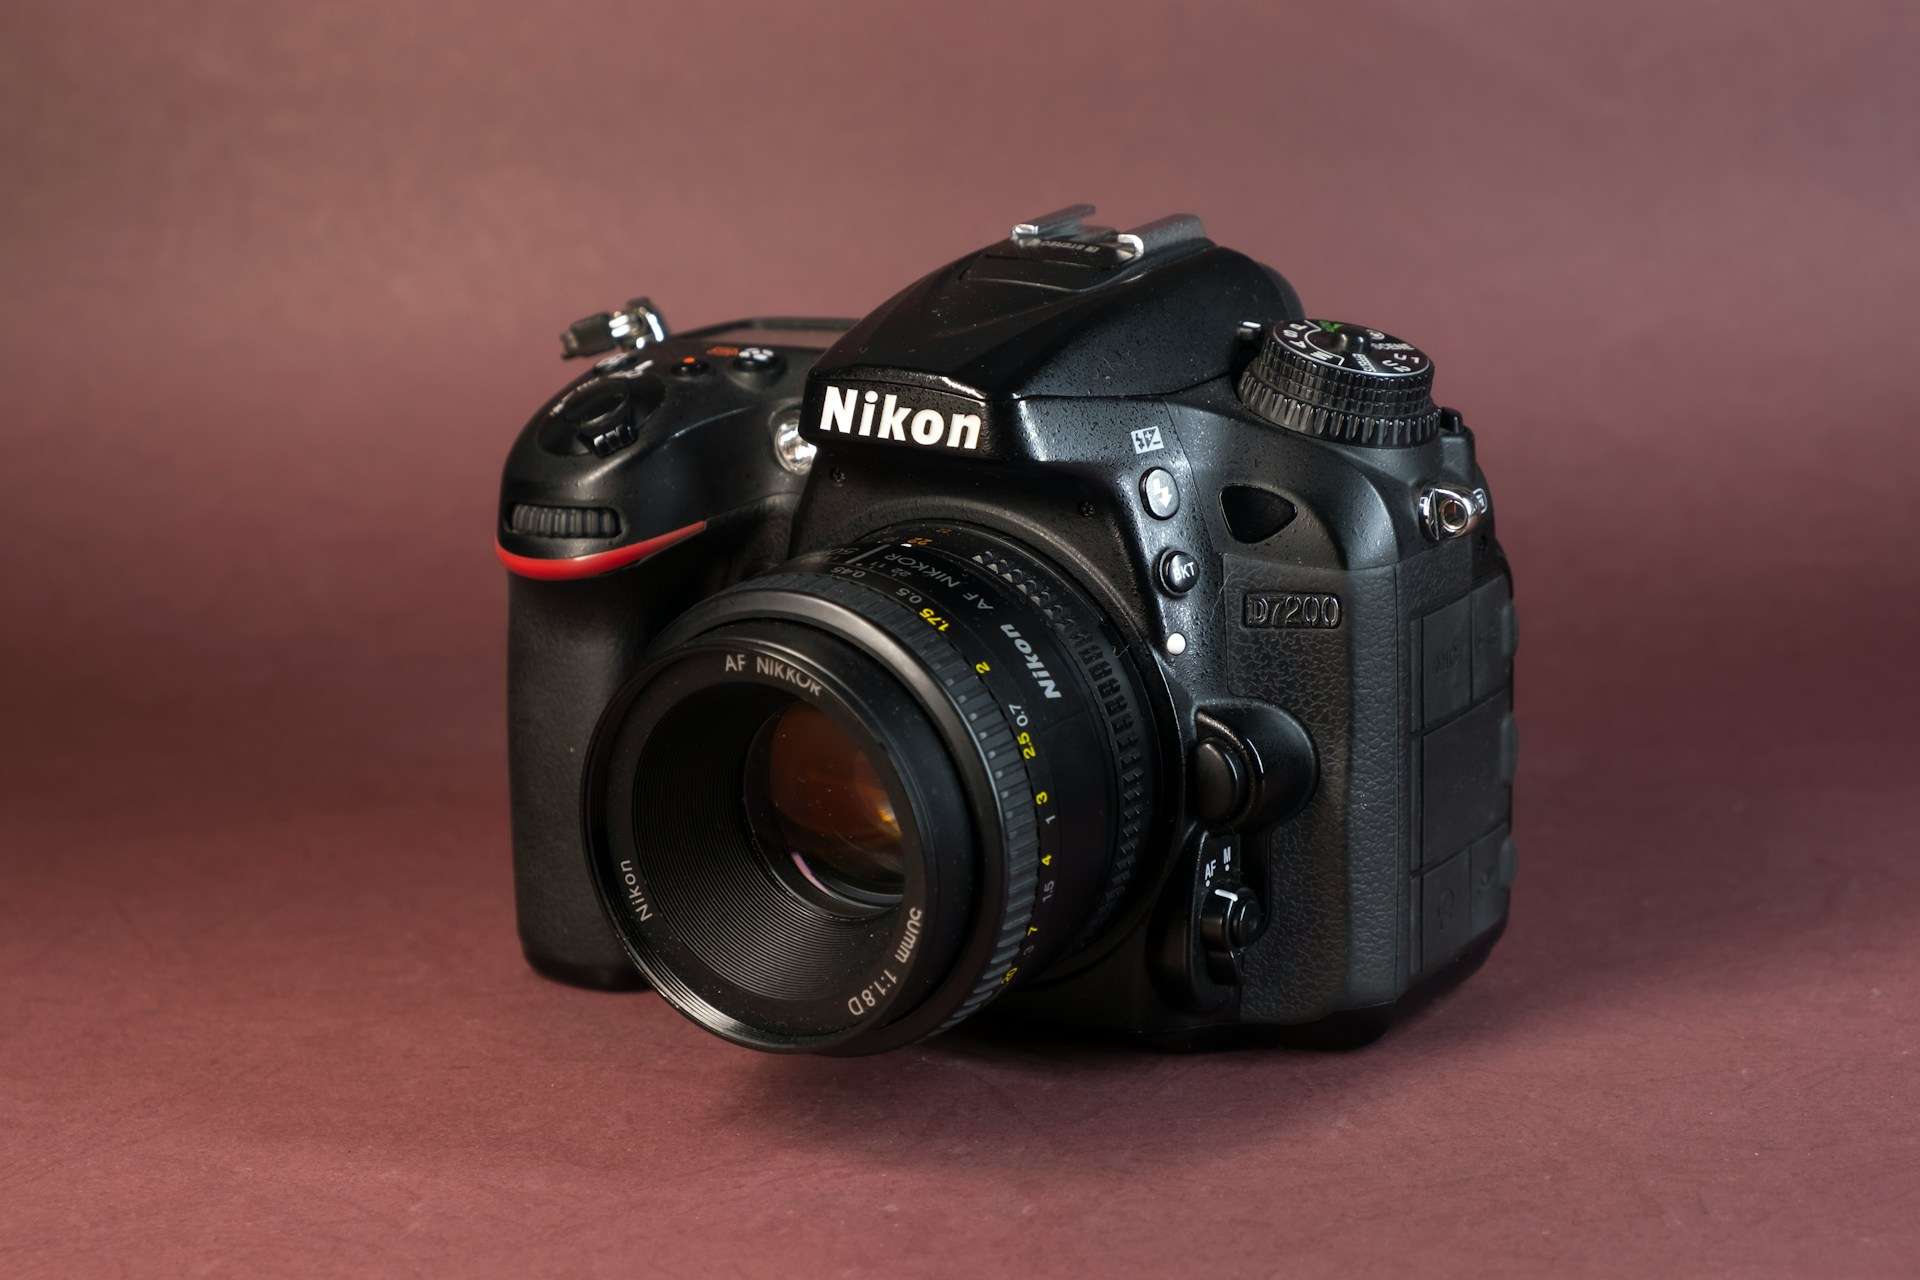 How to Turn On Nikon Camera